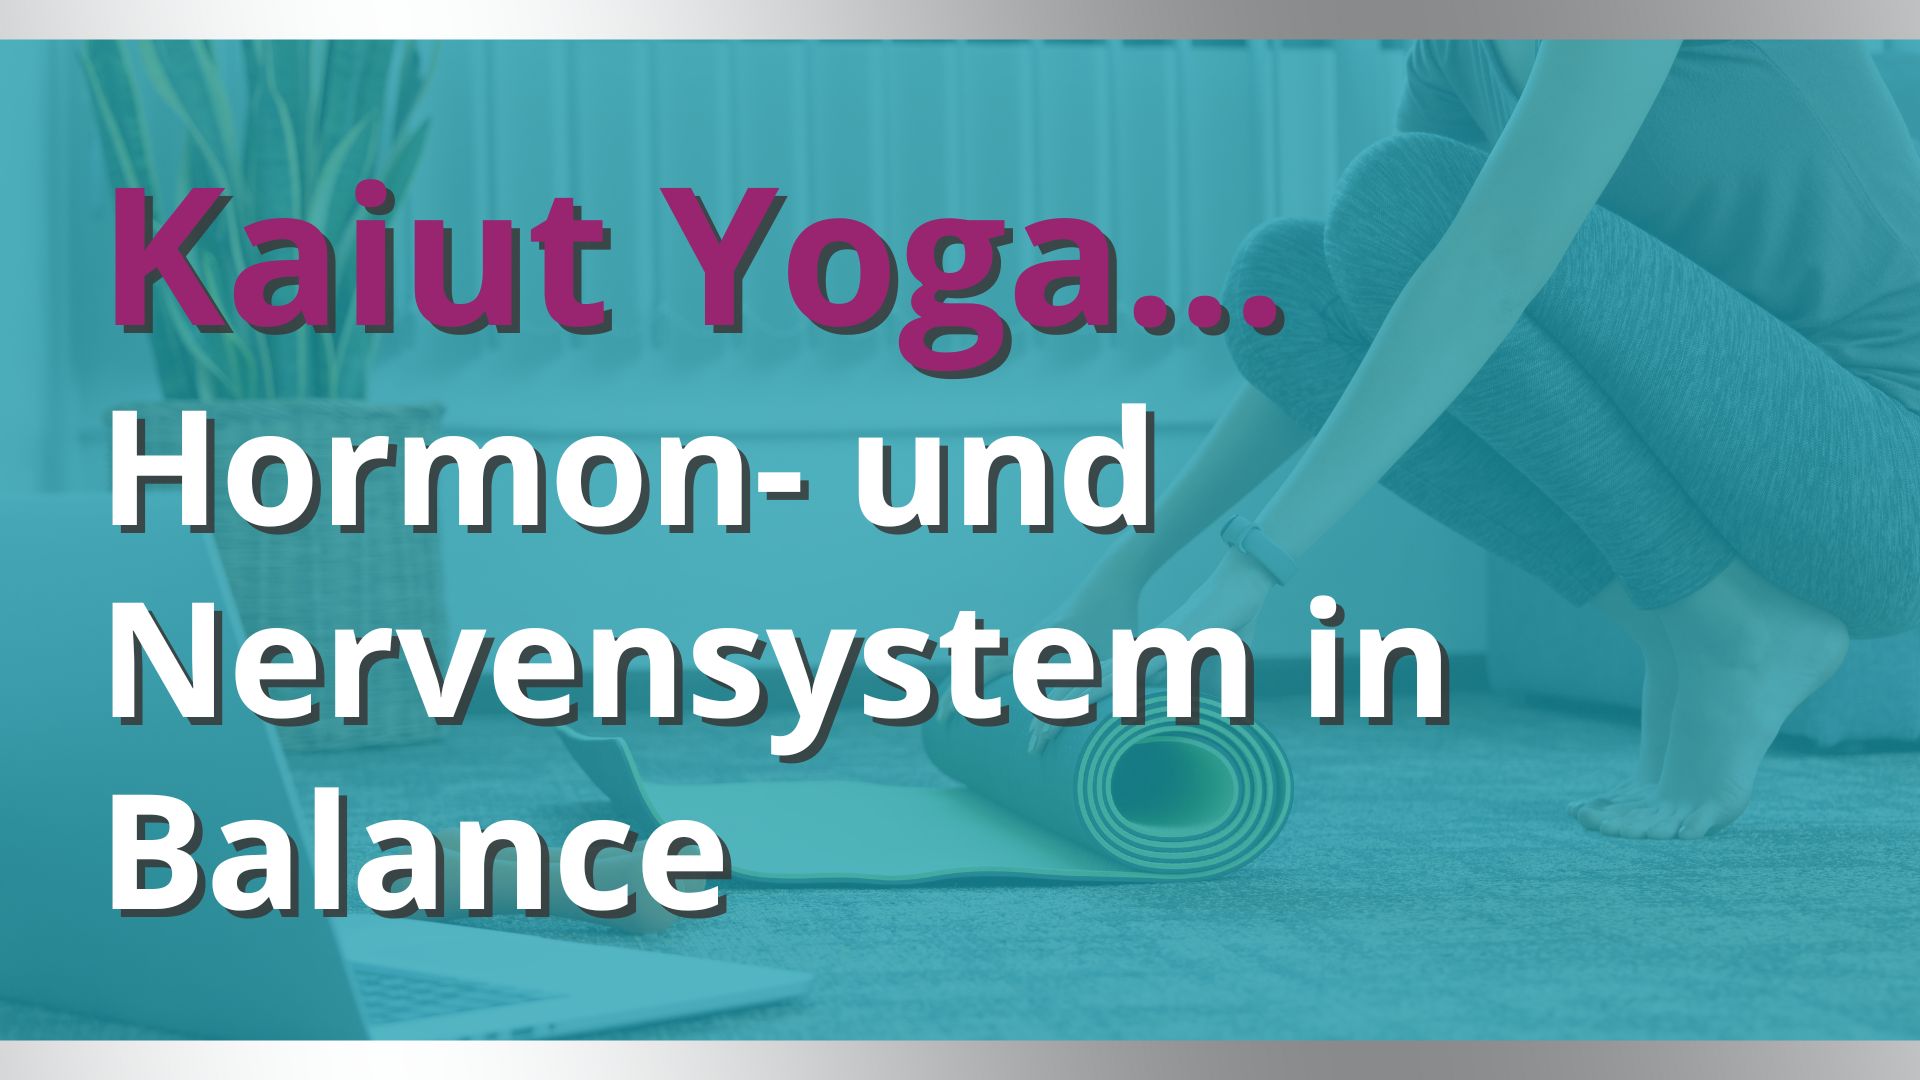 Kaiut Yoga - eine ganz andere Art Hormonyoga